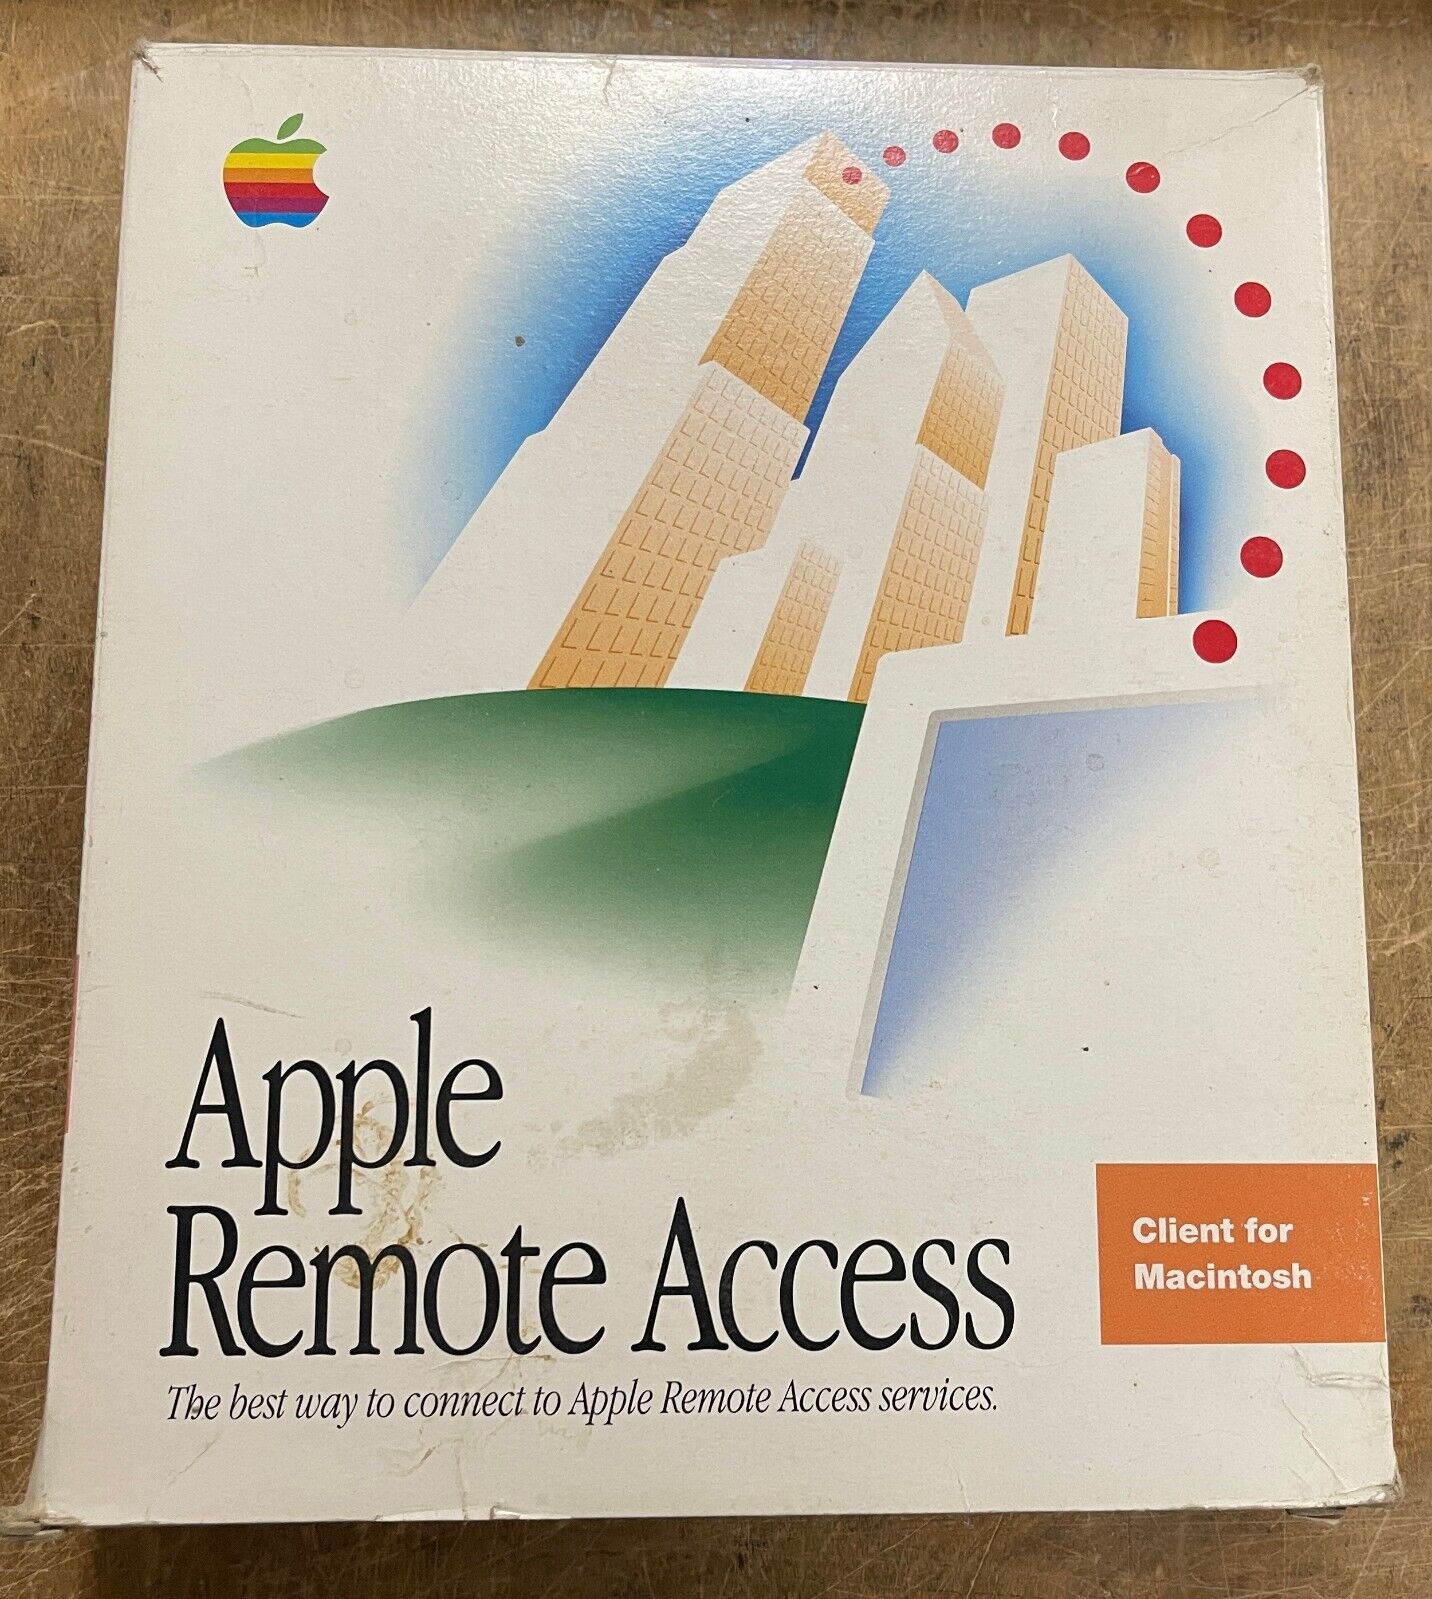 Vintage Apple Remote Access Cl ient for Macintosh M5227Z/B